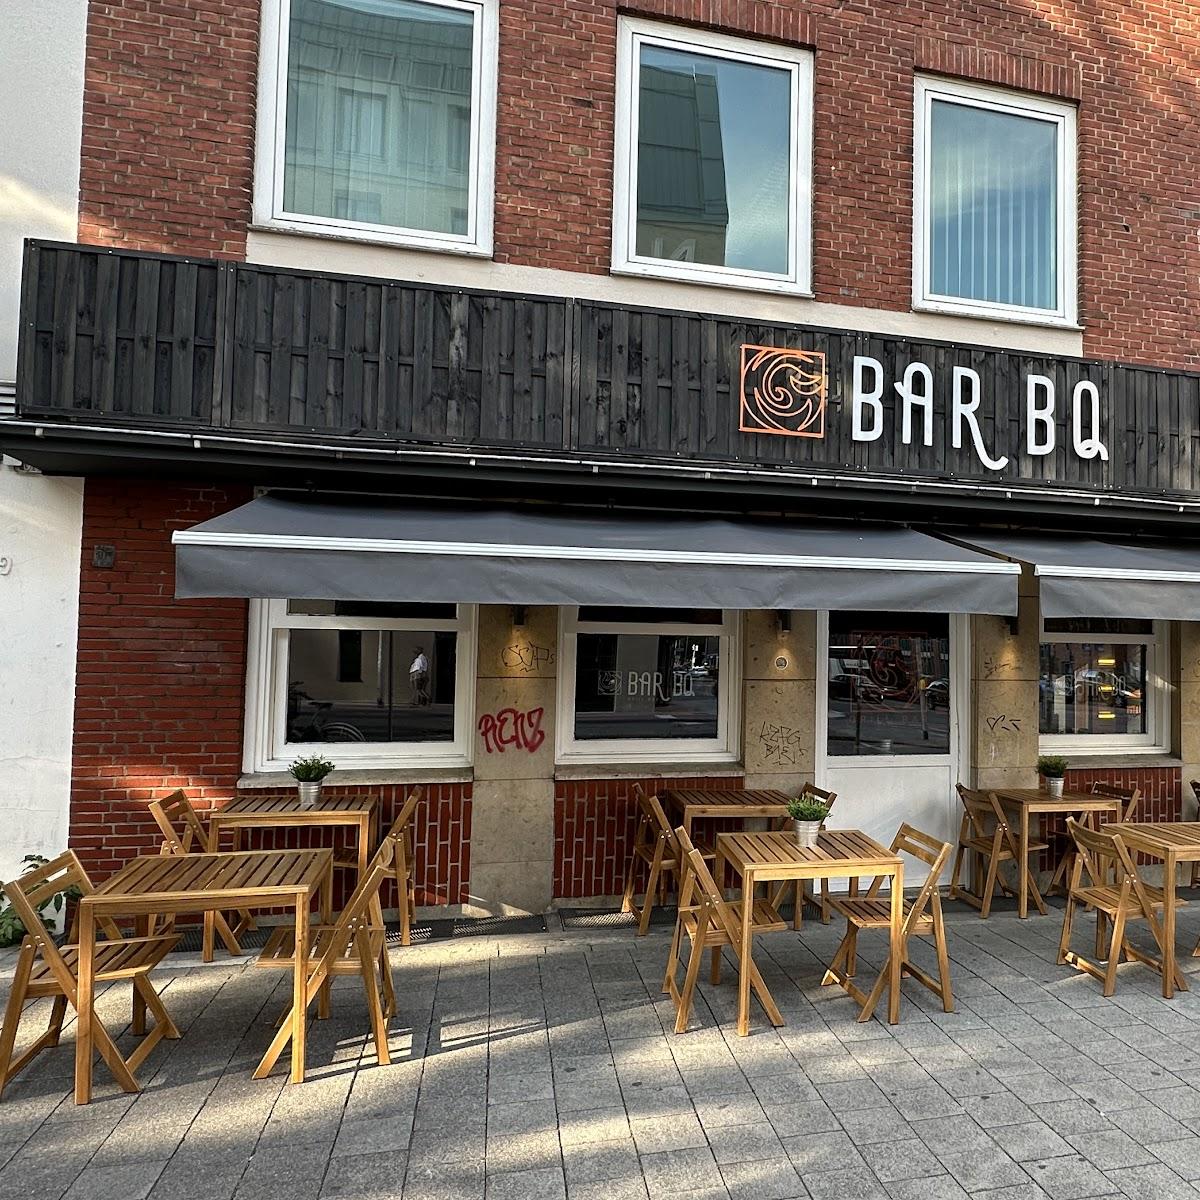 Restaurant "BAR-BQ GRILL BAR RESTAURANT" in Münster